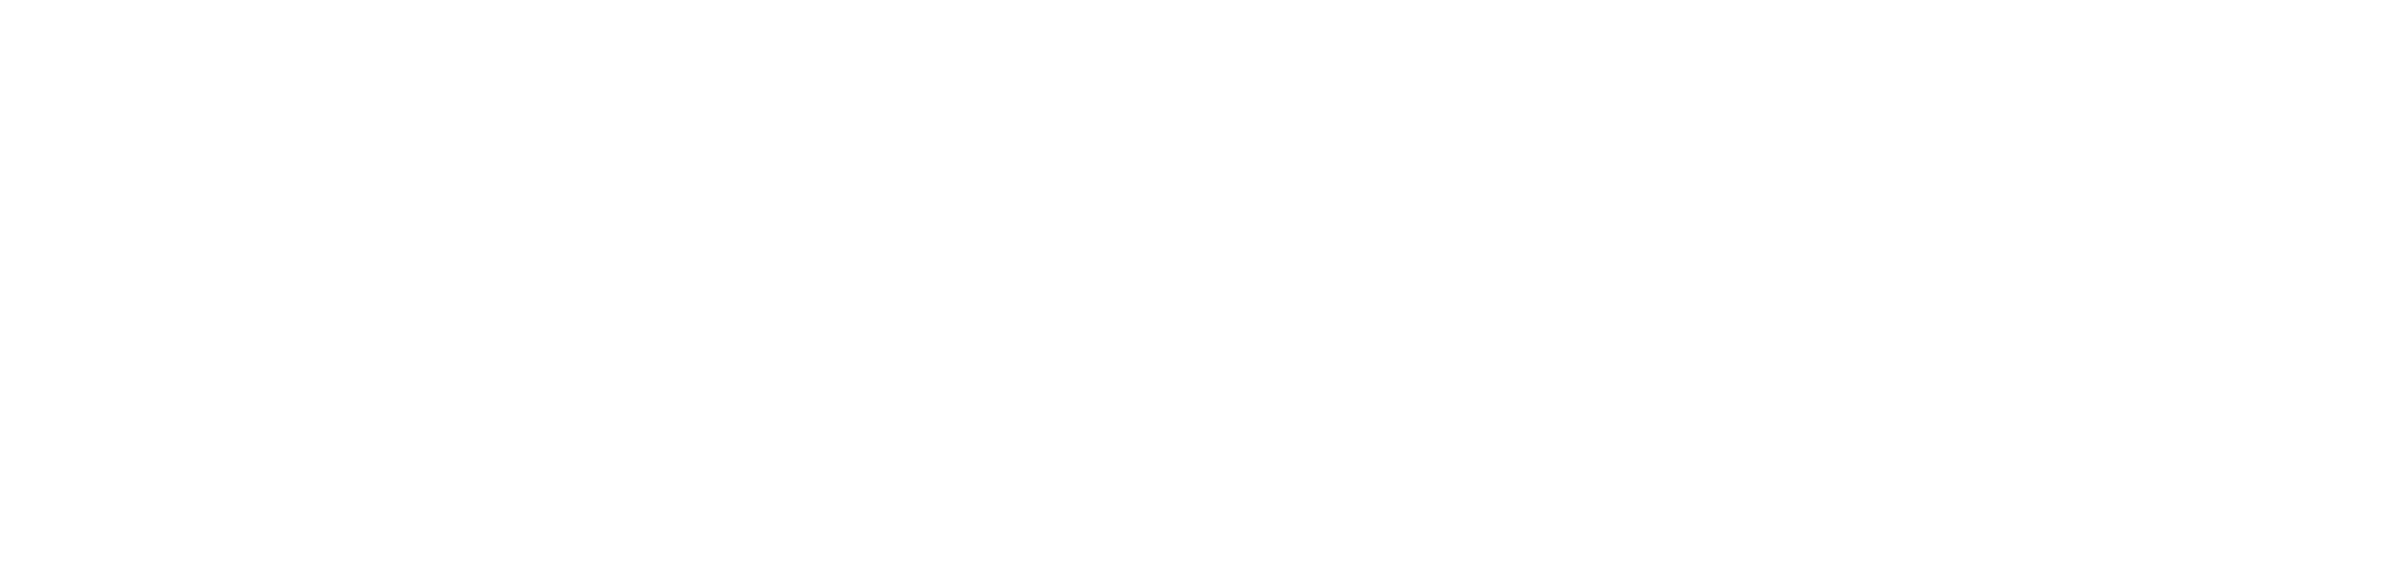 walmart-logo-black-and-white